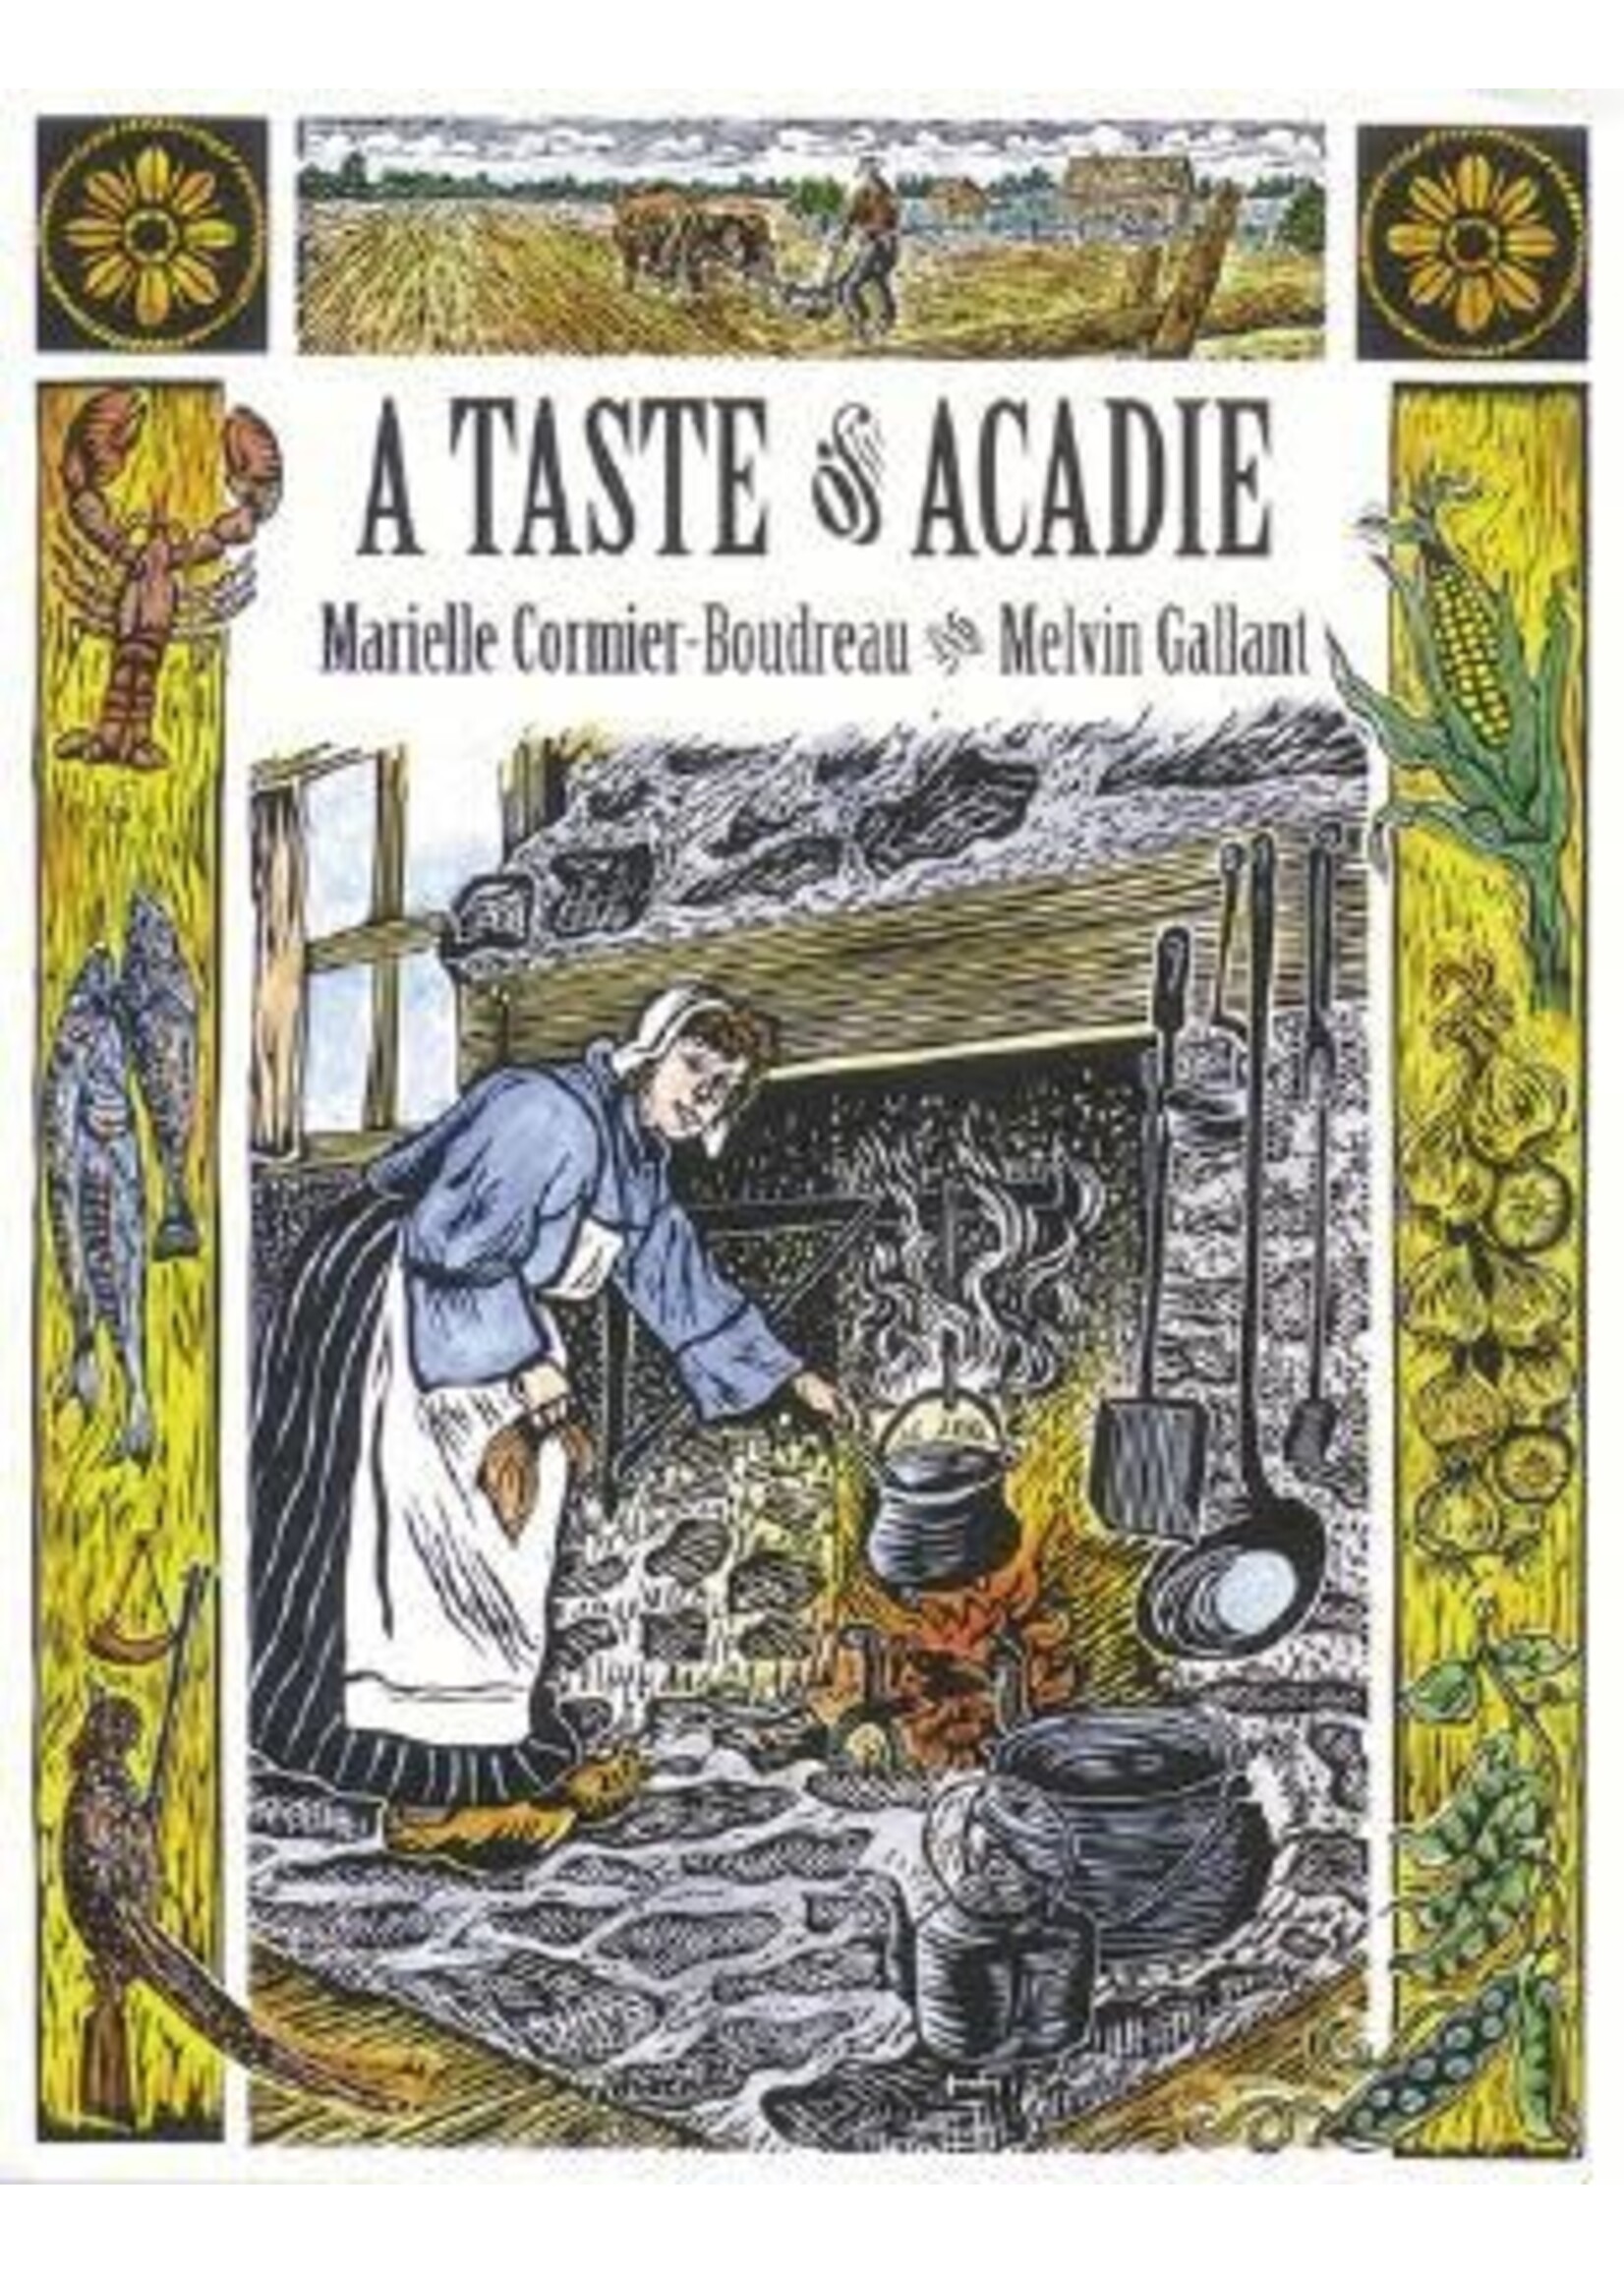 A Taste of Acadie by Marielle Cormier-Boudreau, Melvin Gallant